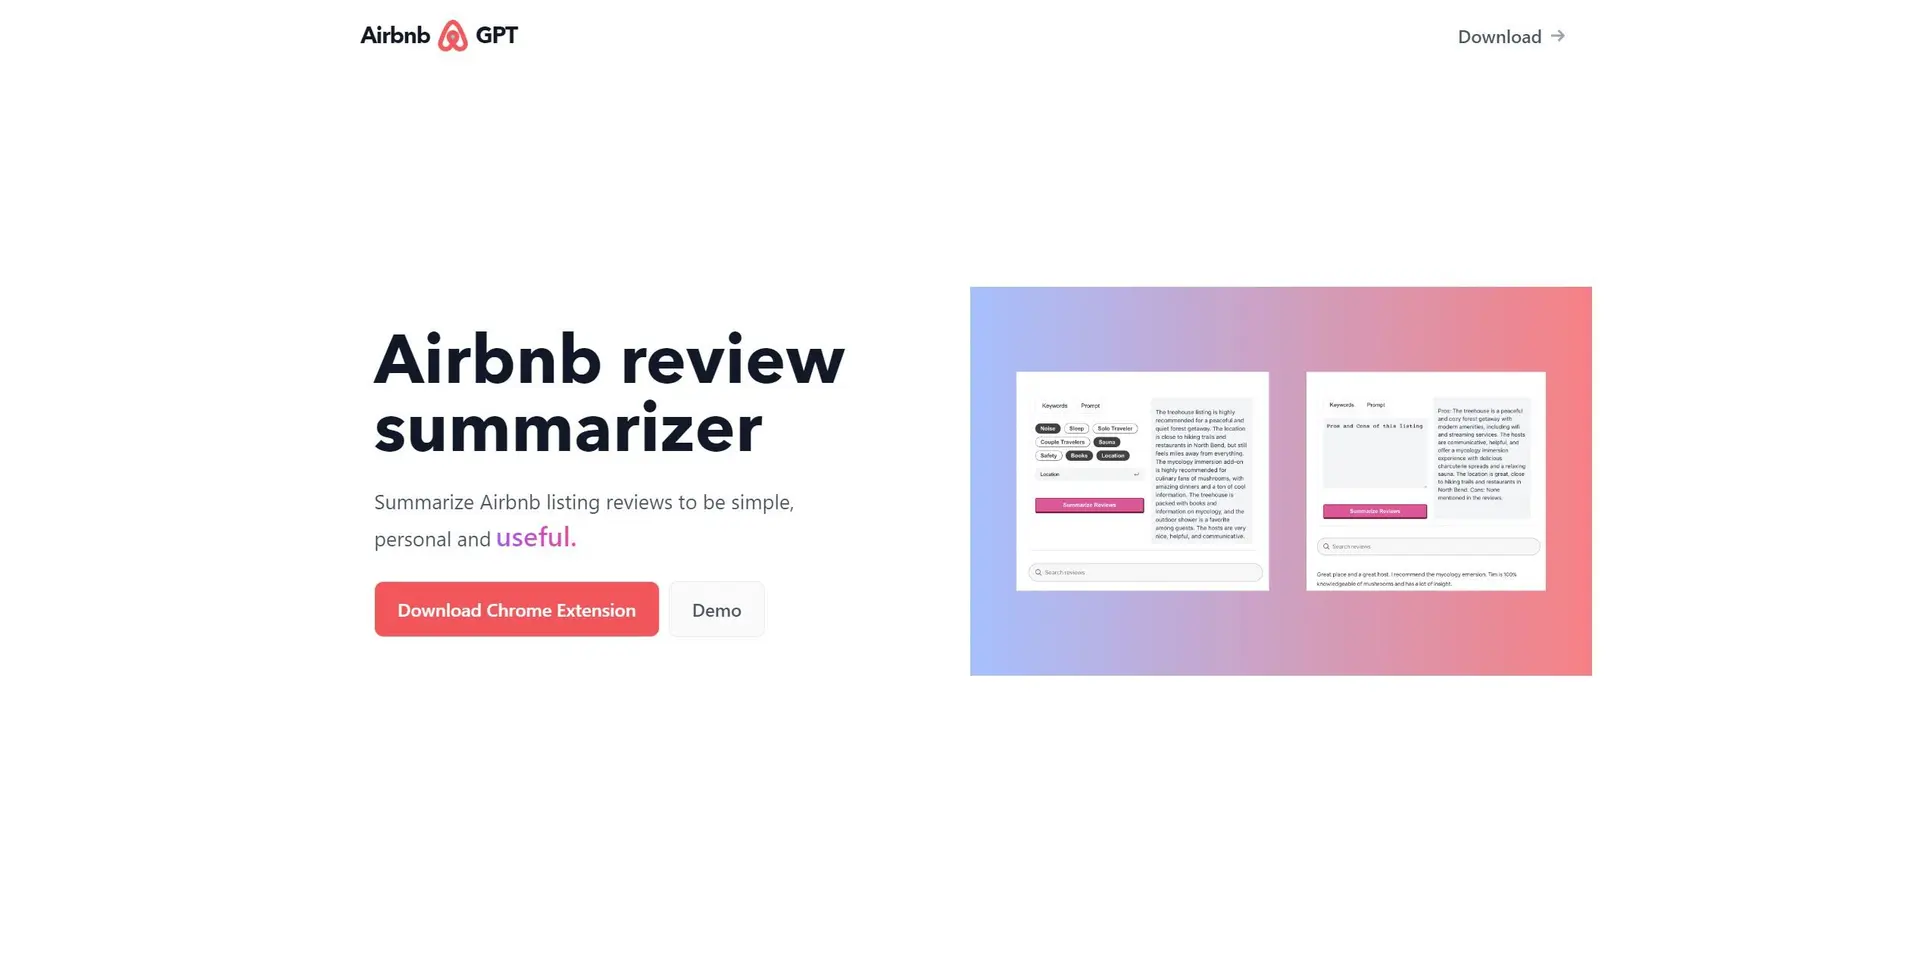 Airbnb Review Summarizerwebsite picture